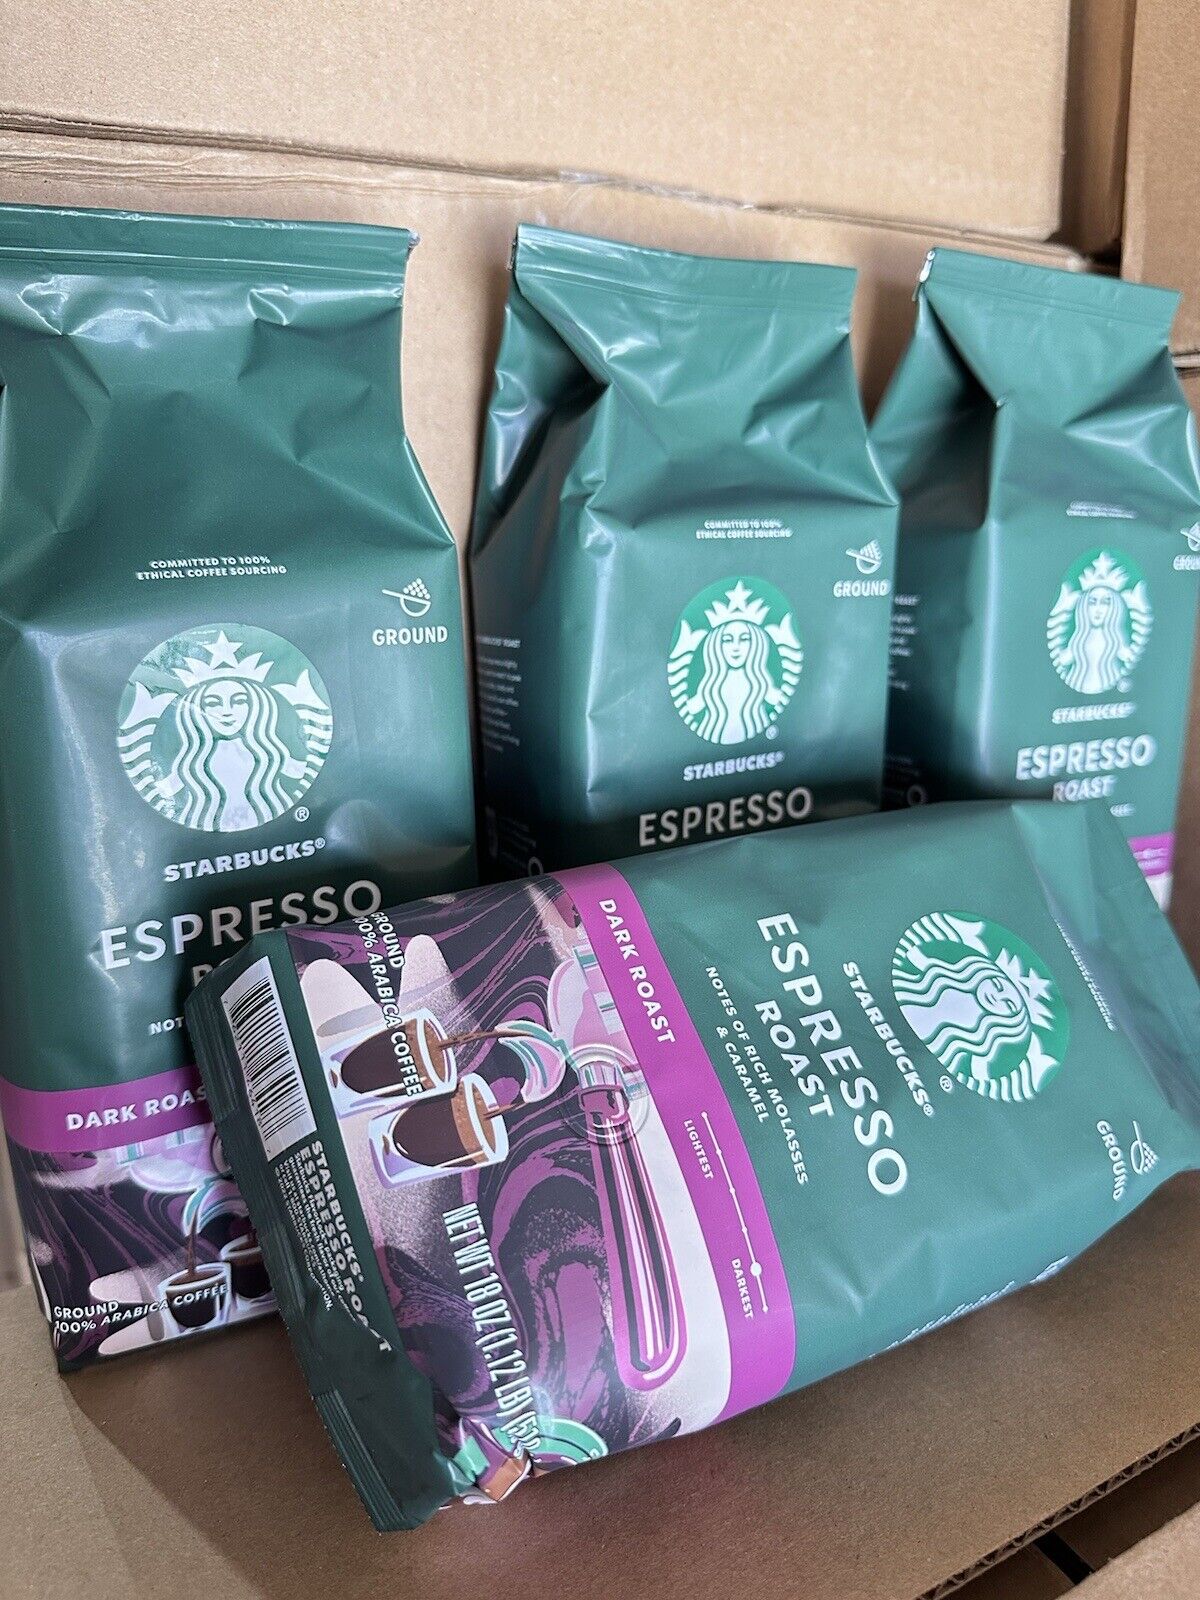 Starbucks Espresso Roast (Dark Roast) coffee 18 oz (pack of 6) 6.75 lbs